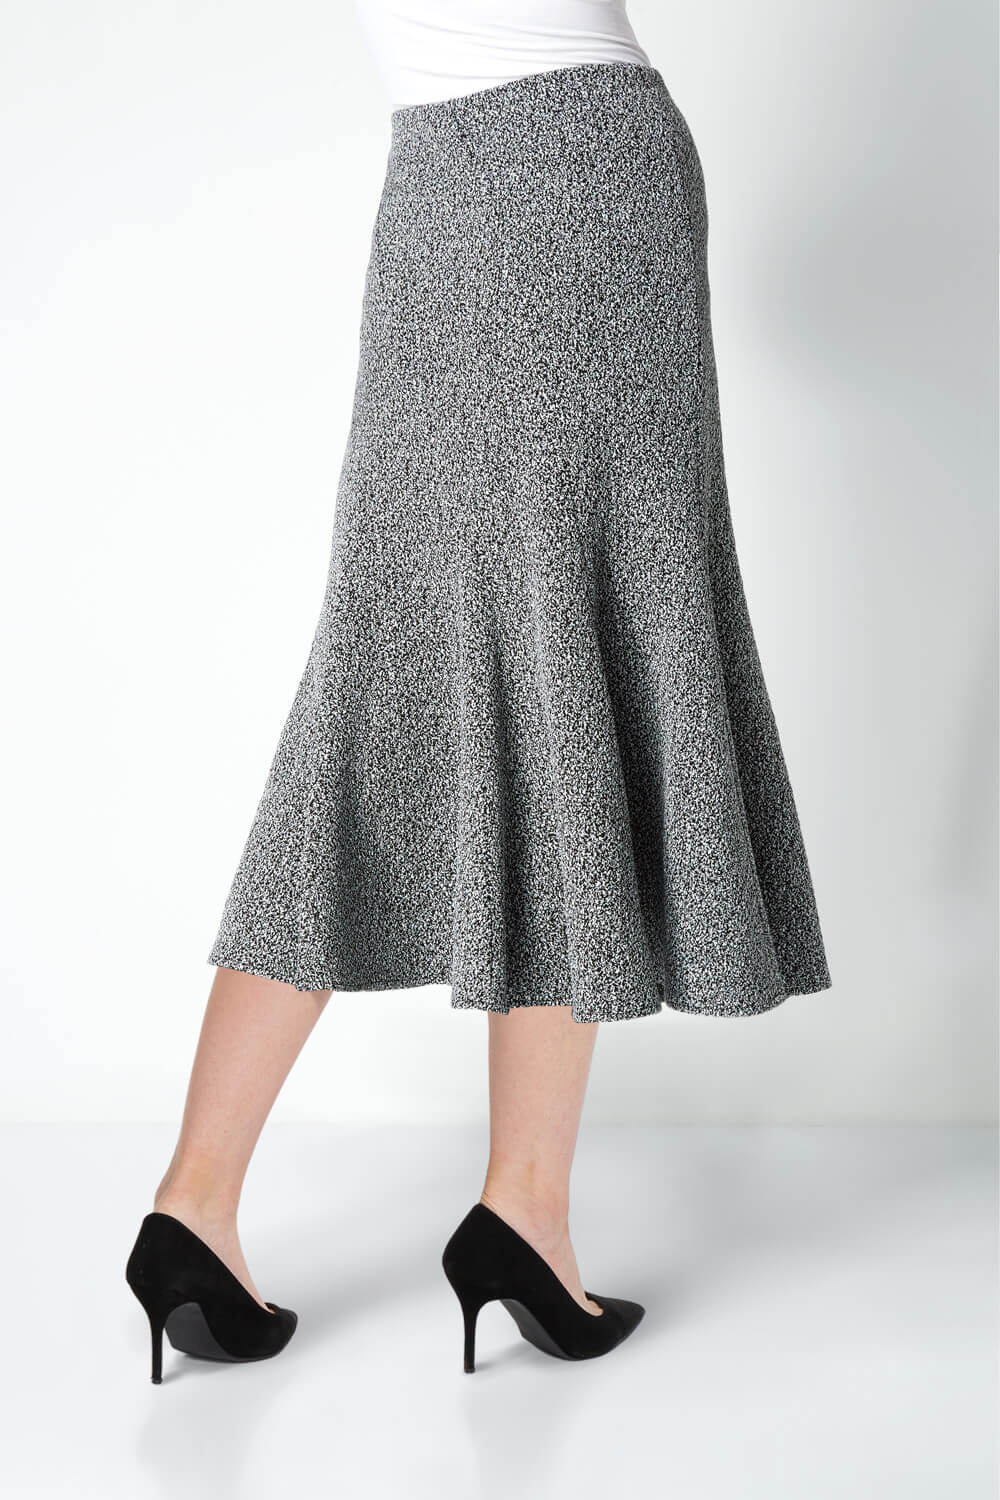 Texture Flared Skirt in Grey - Roman Originals UK